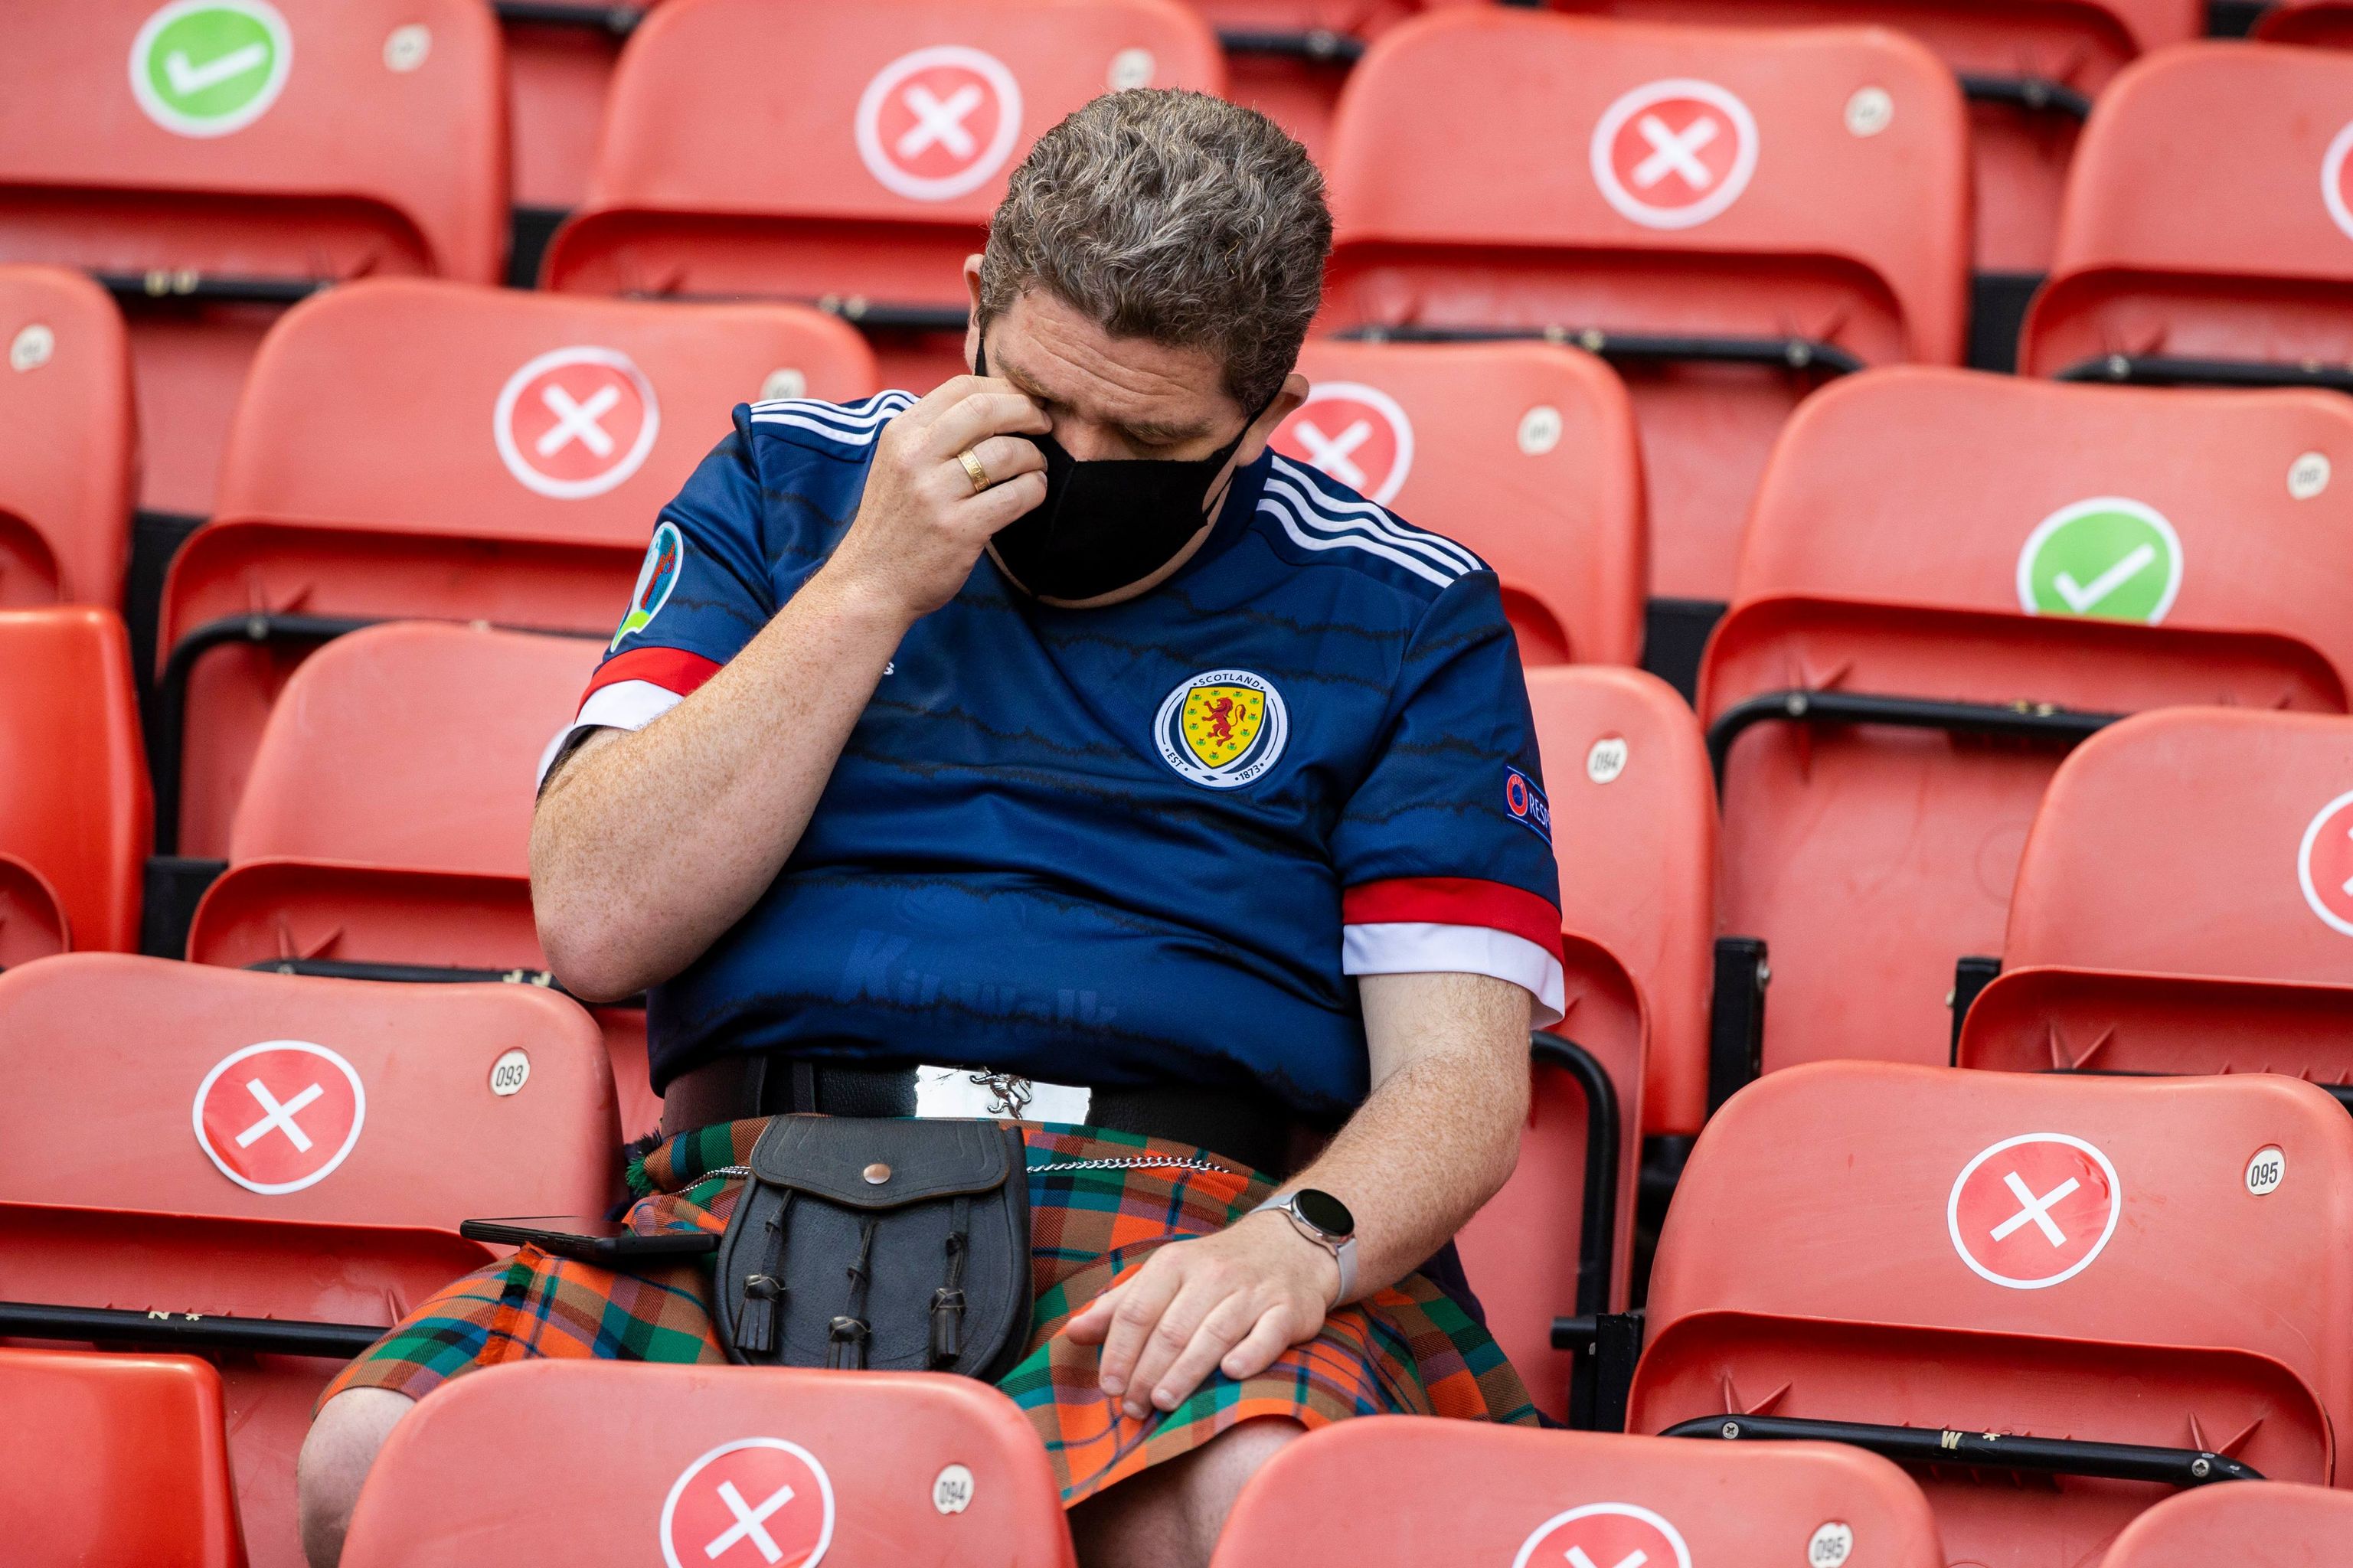 Scotland lost 2-0 to the Czech Republic at Hampden Park in Glasgow.